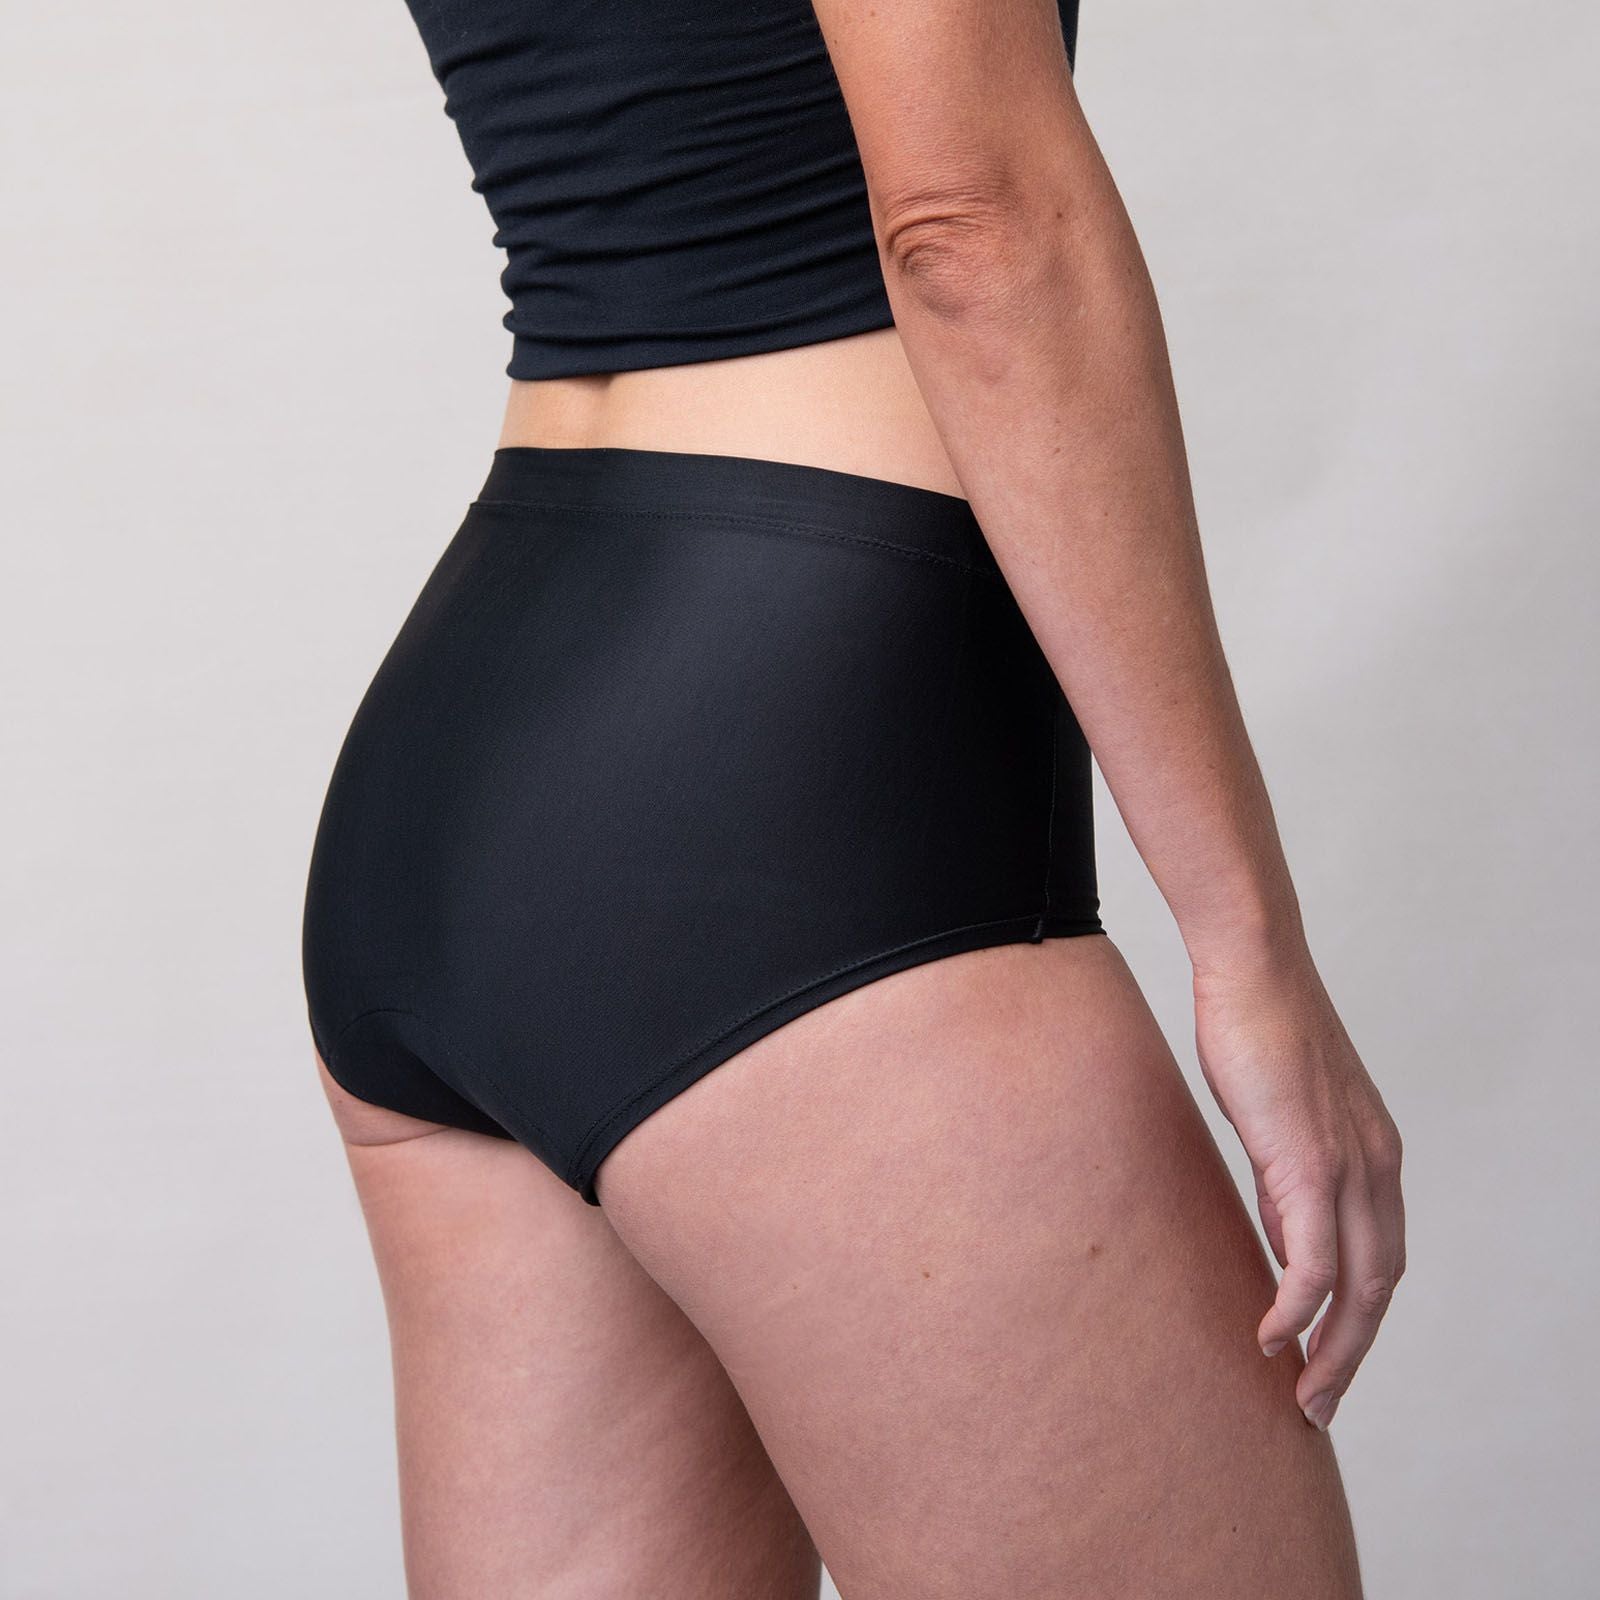  KPBMKE Period Underwear for Women Heavy Flow High Absorbent  Leak Proof Washable Incontinence Underwear 3 Pack XS Black : Health &  Household